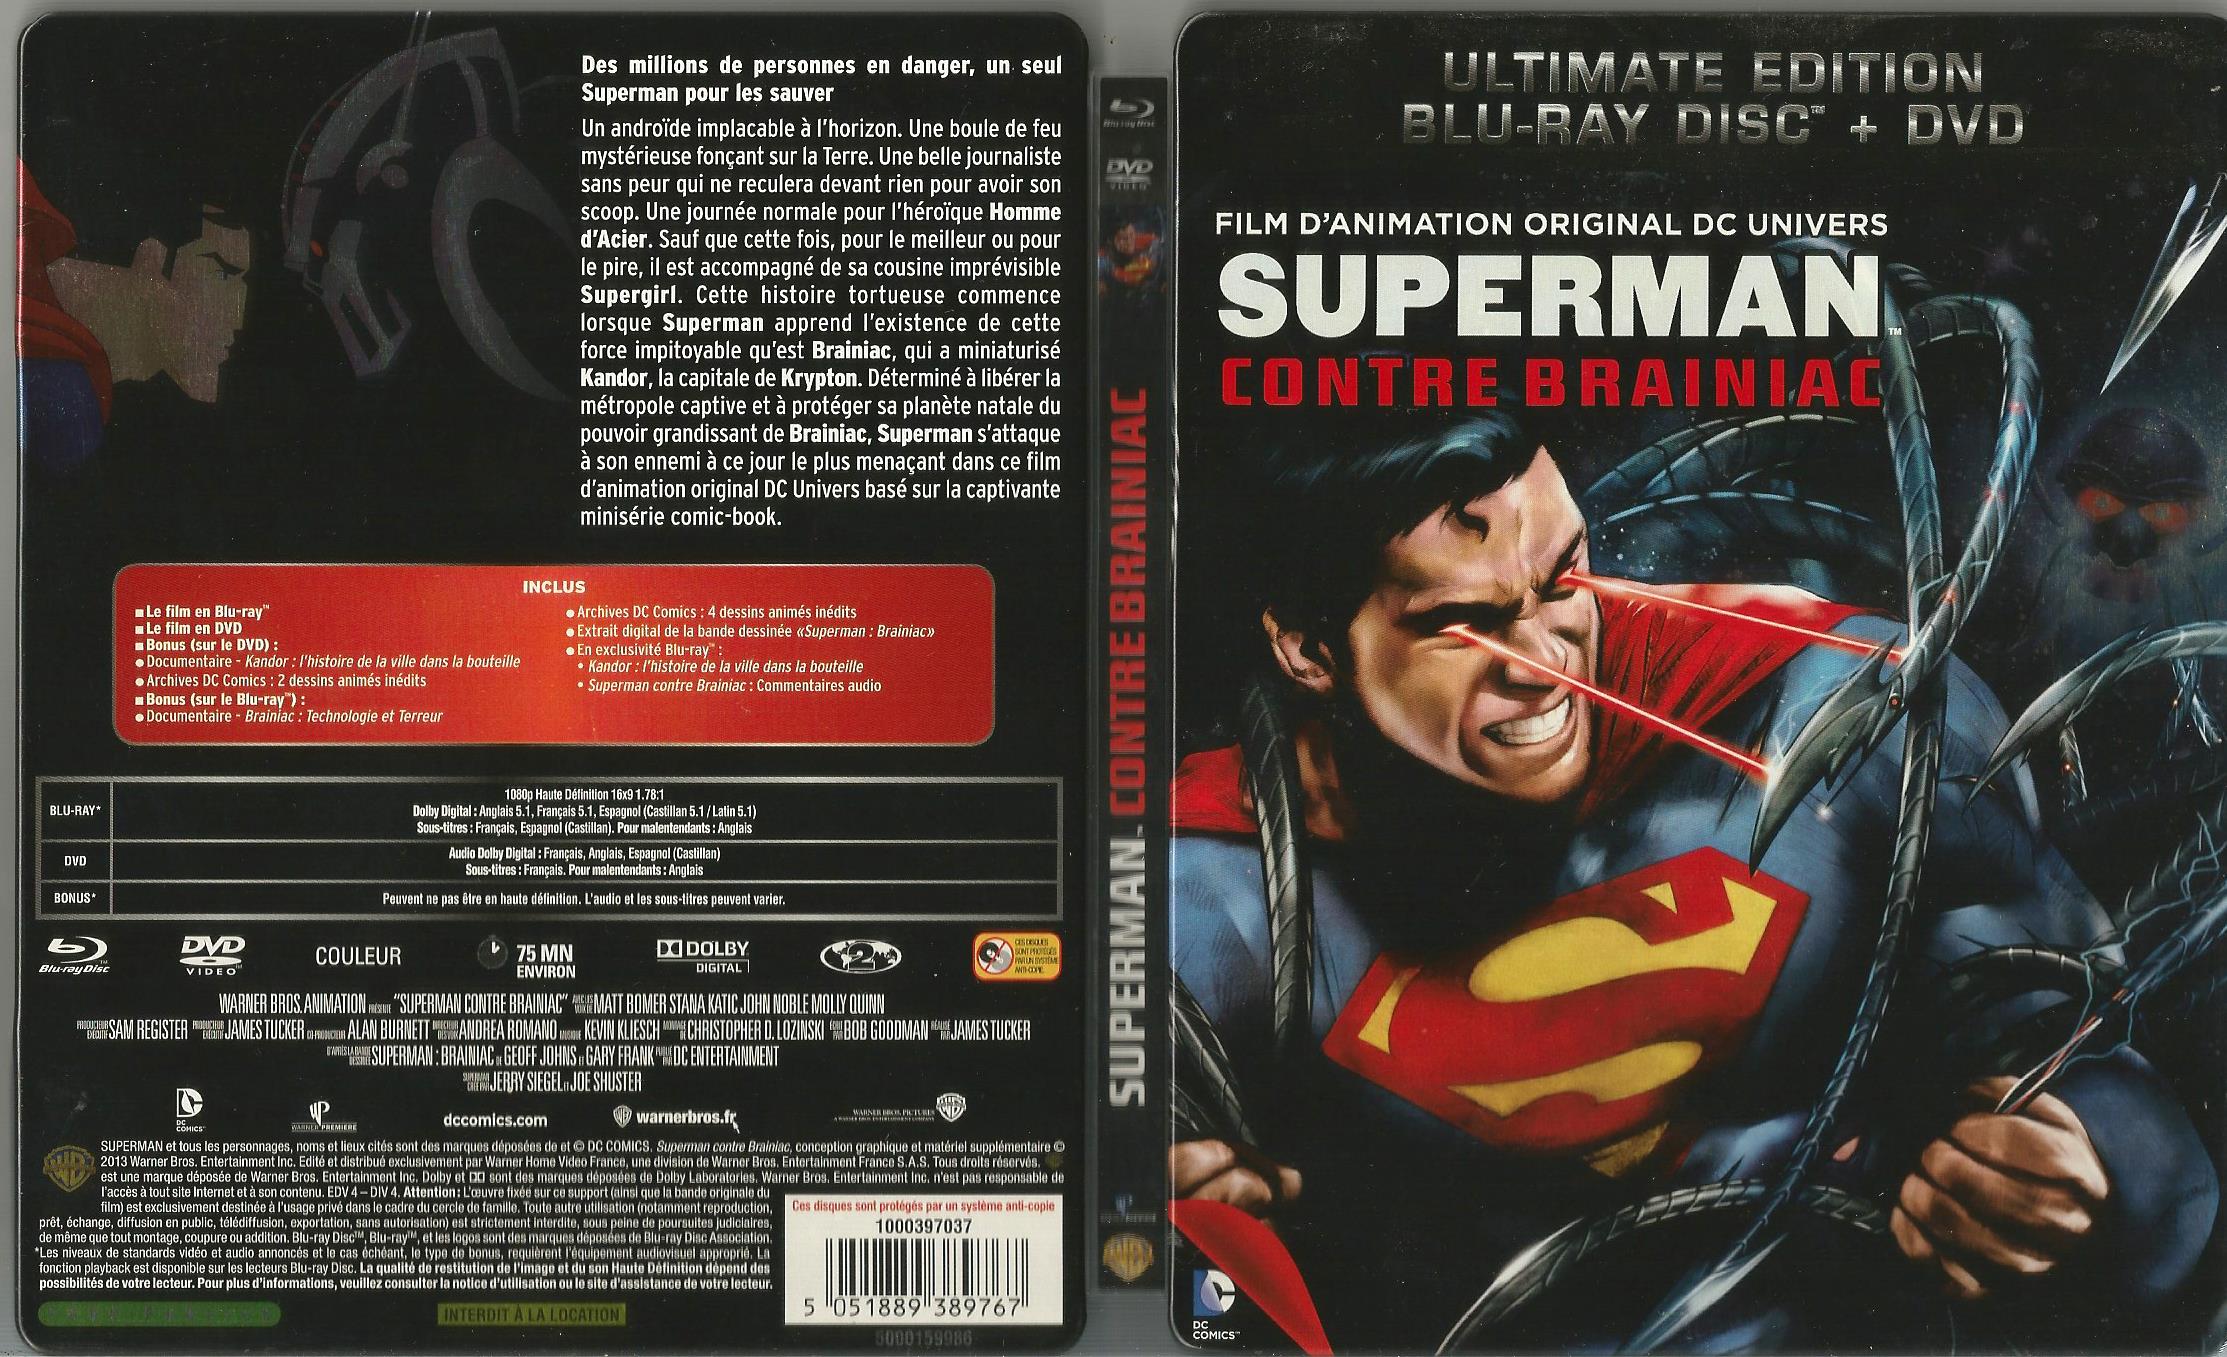 Jaquette DVD Superman contre Brainiac (BLU-RAY)